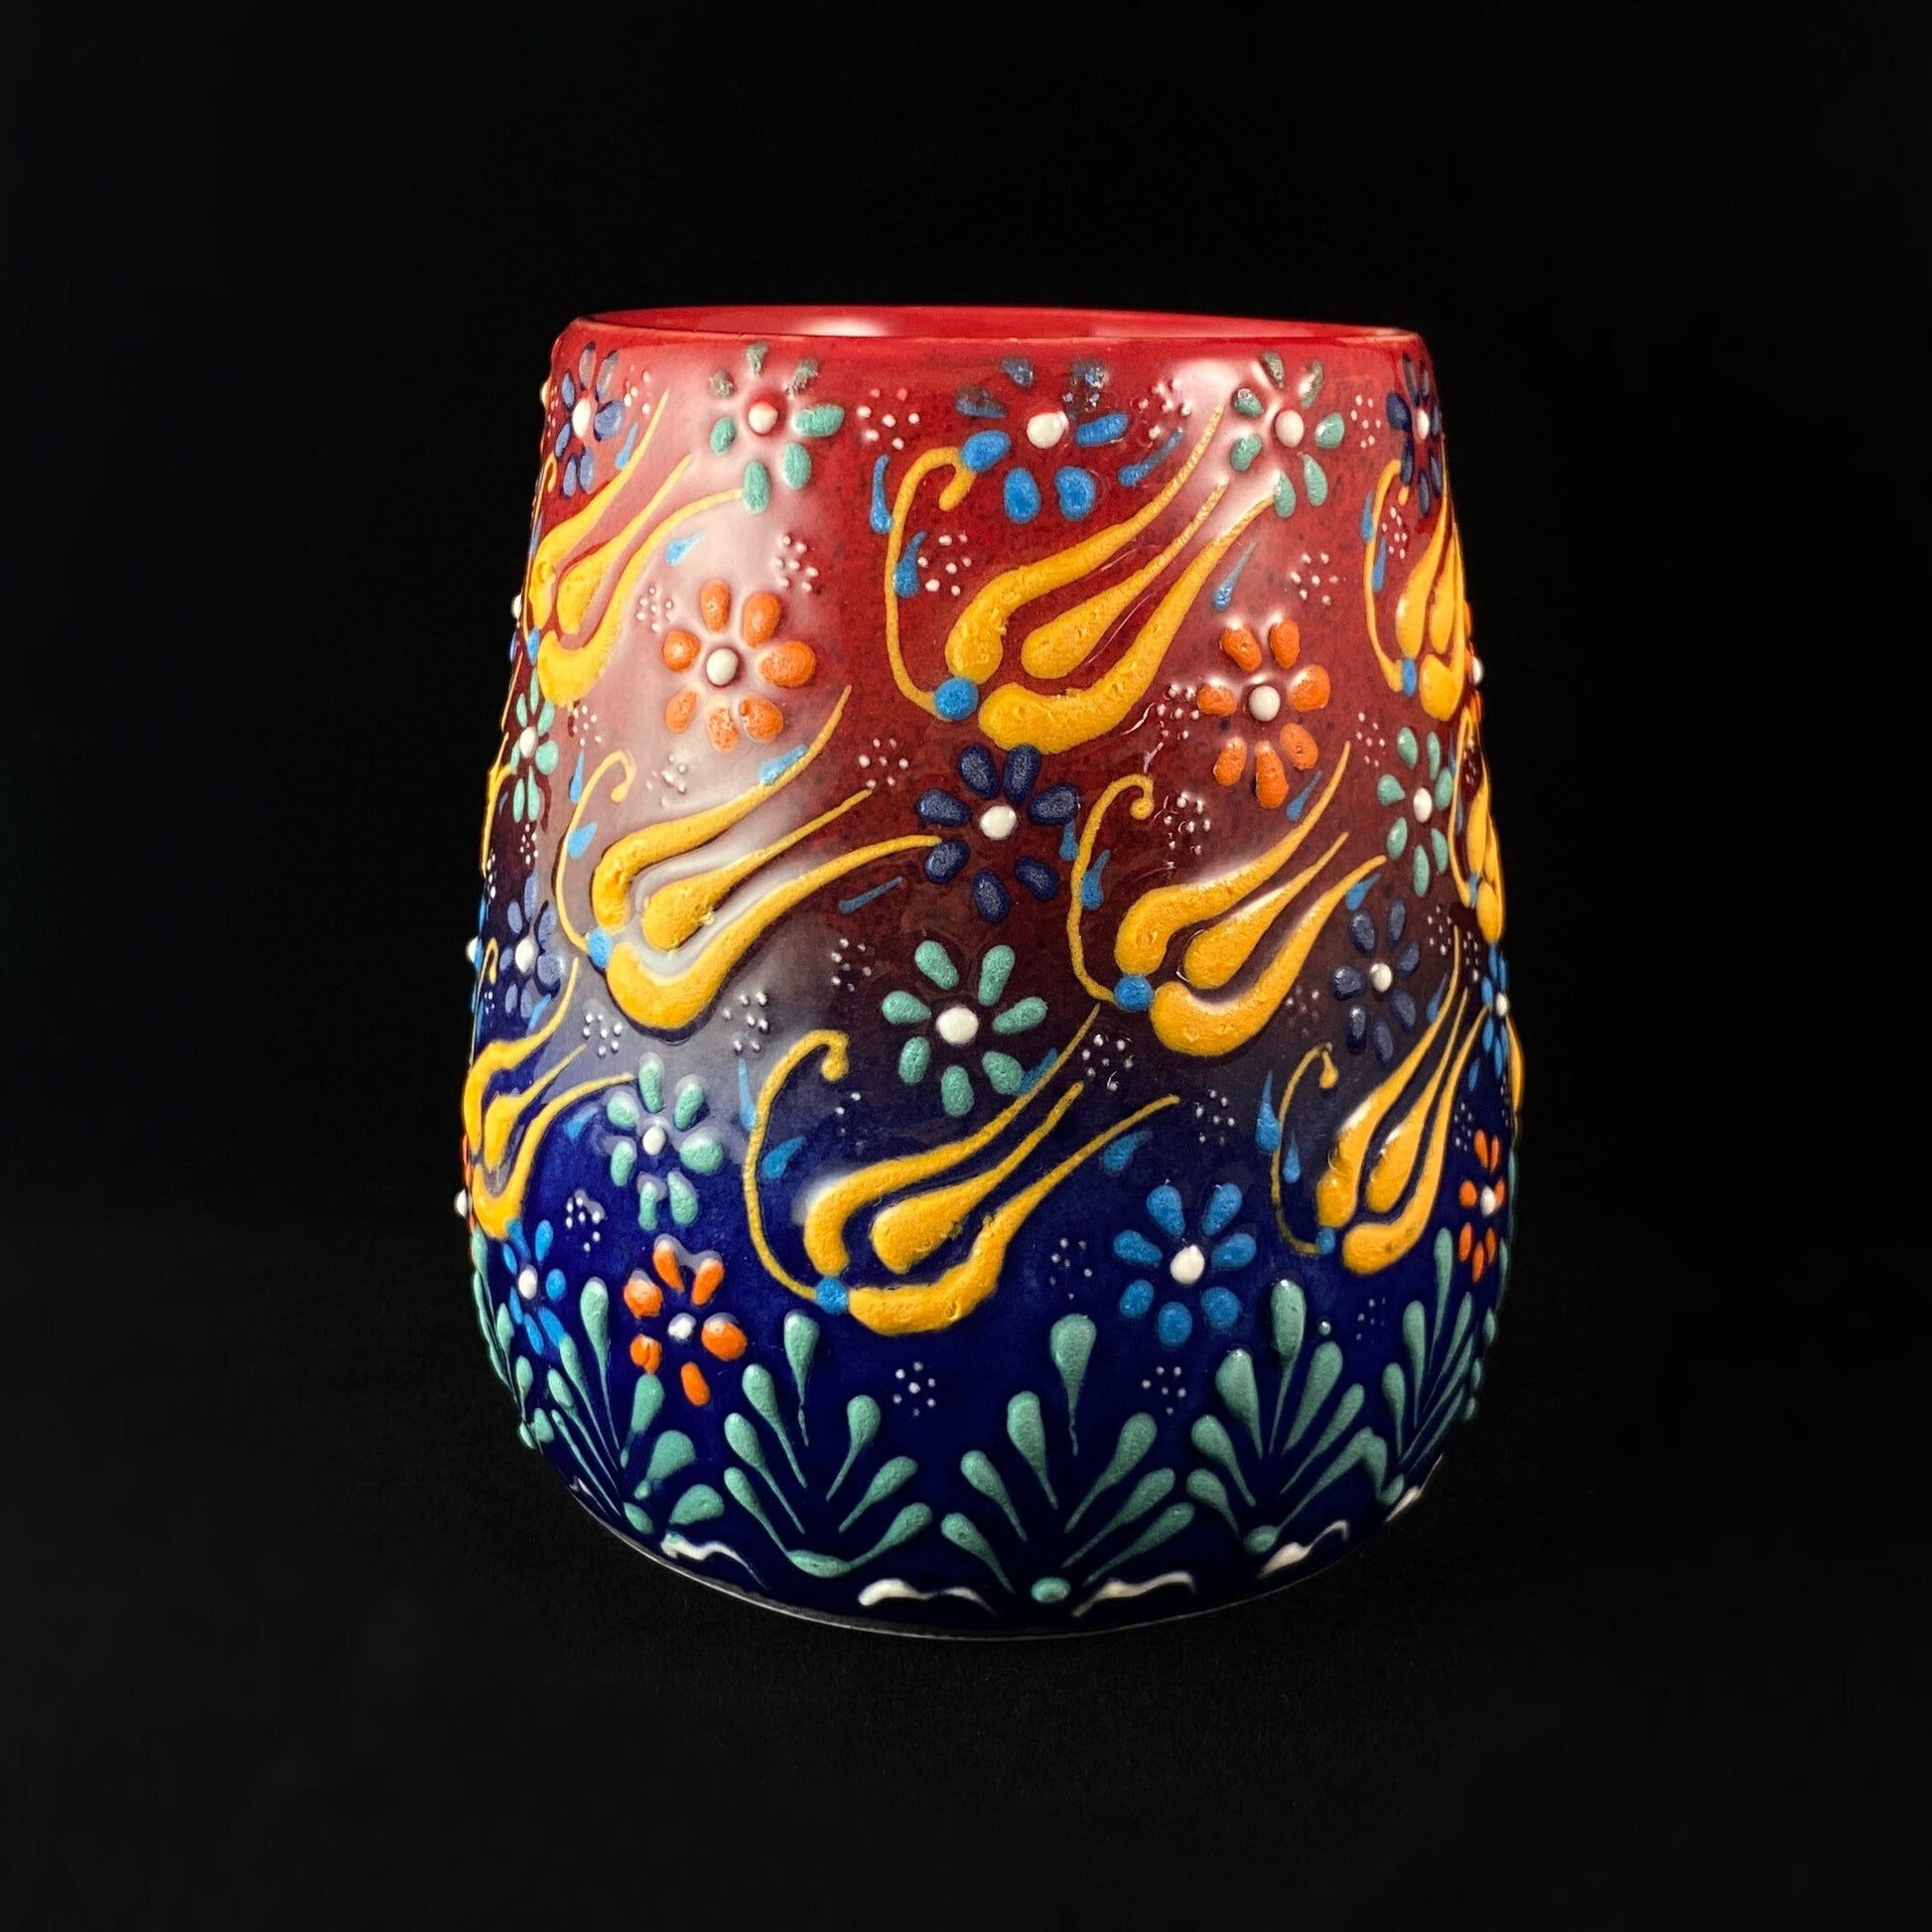 Handmade Mug, Functional and Decorative Turkish Pottery, Cottagecore Style, Red/Blue